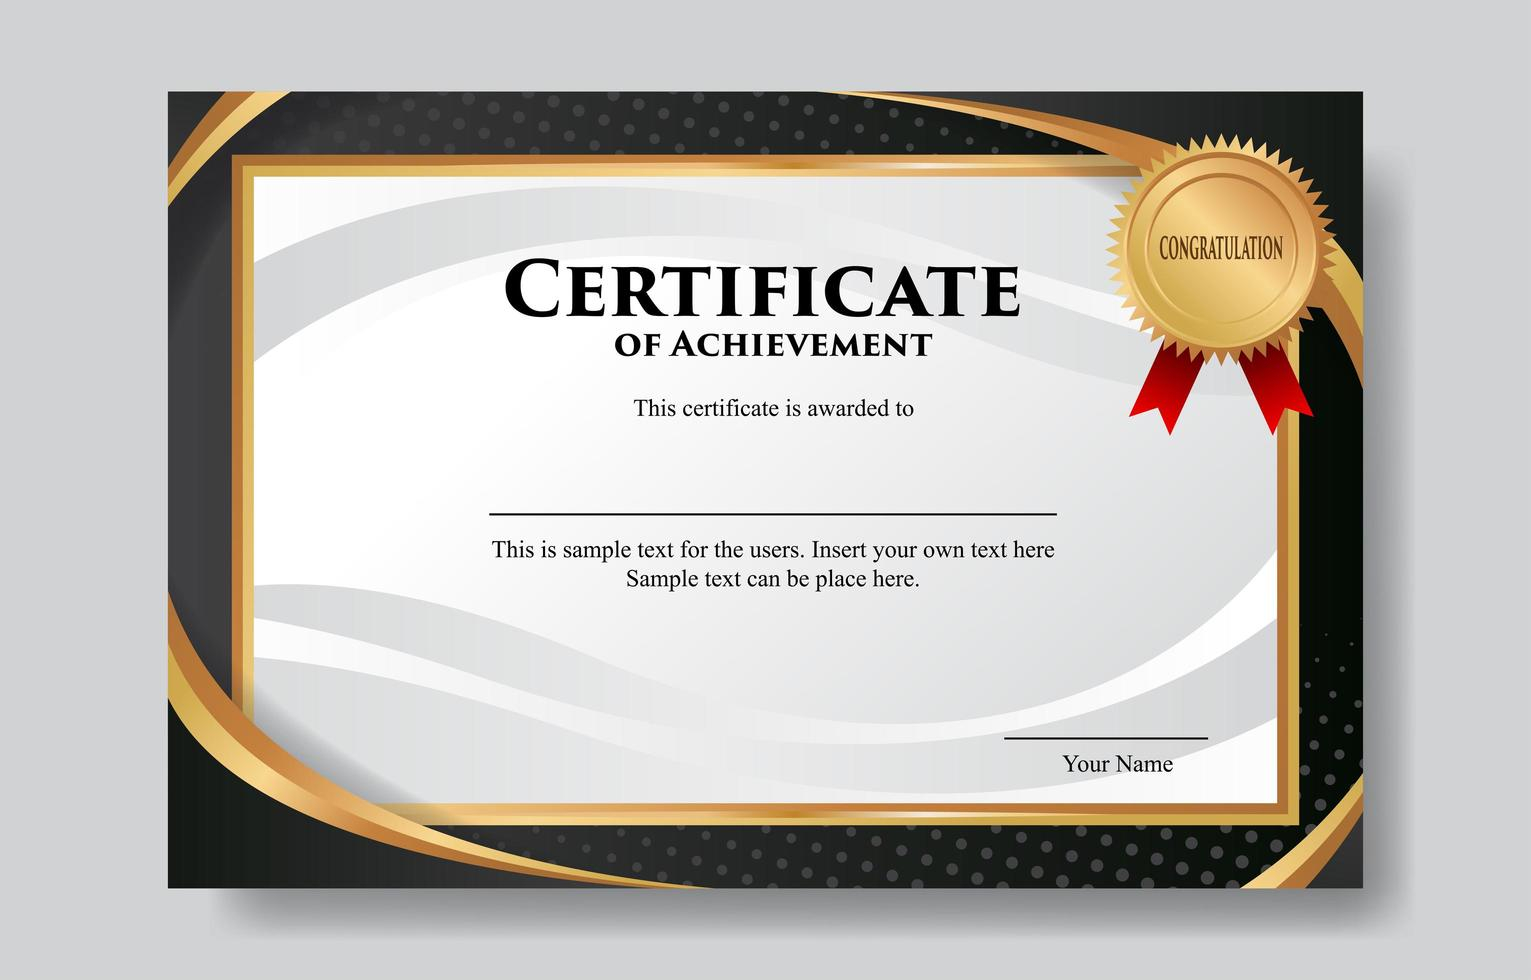 Black Gold Certificate Design Template 10 Vector Art At Vecteezy With Regard To Art Certificate Template Free